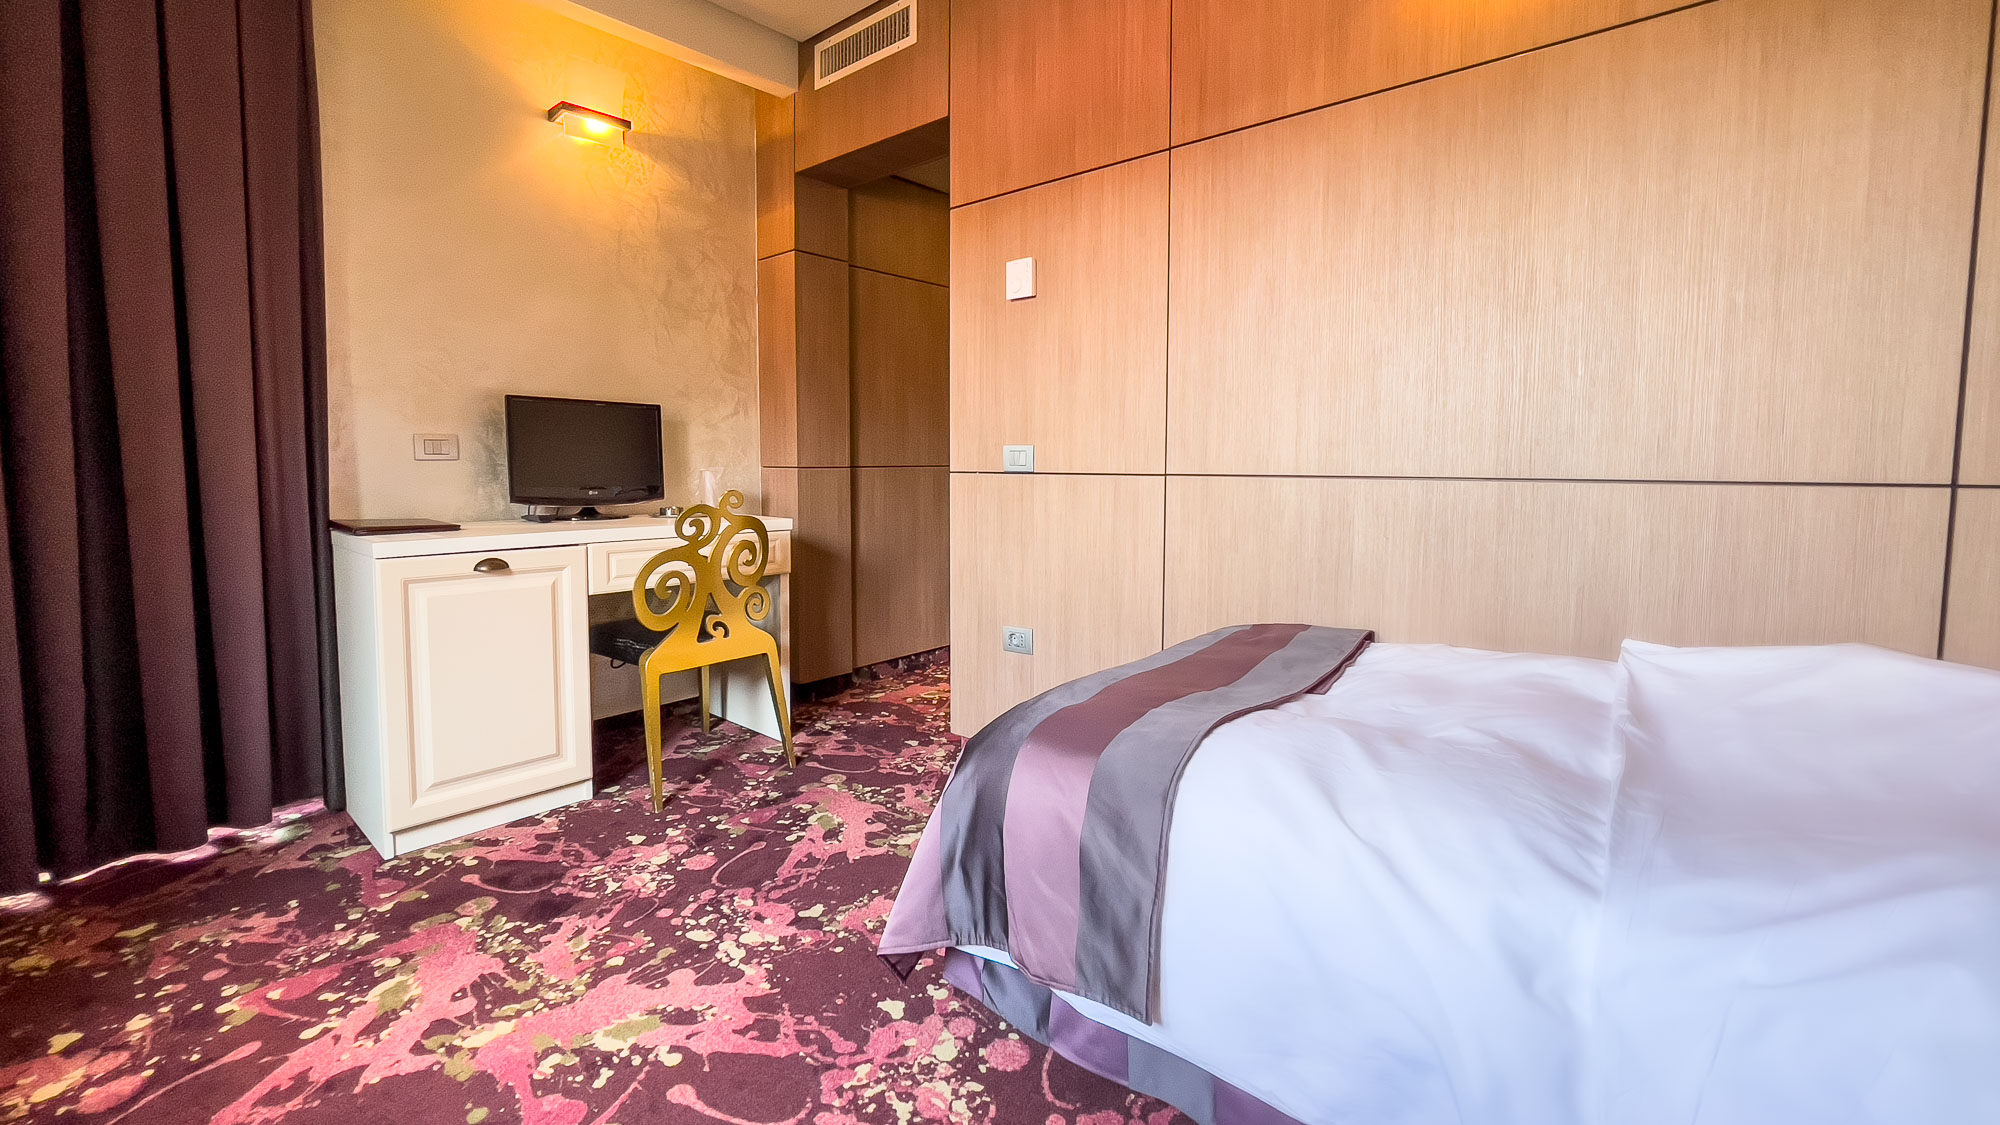 Hotel Tolea - Single room